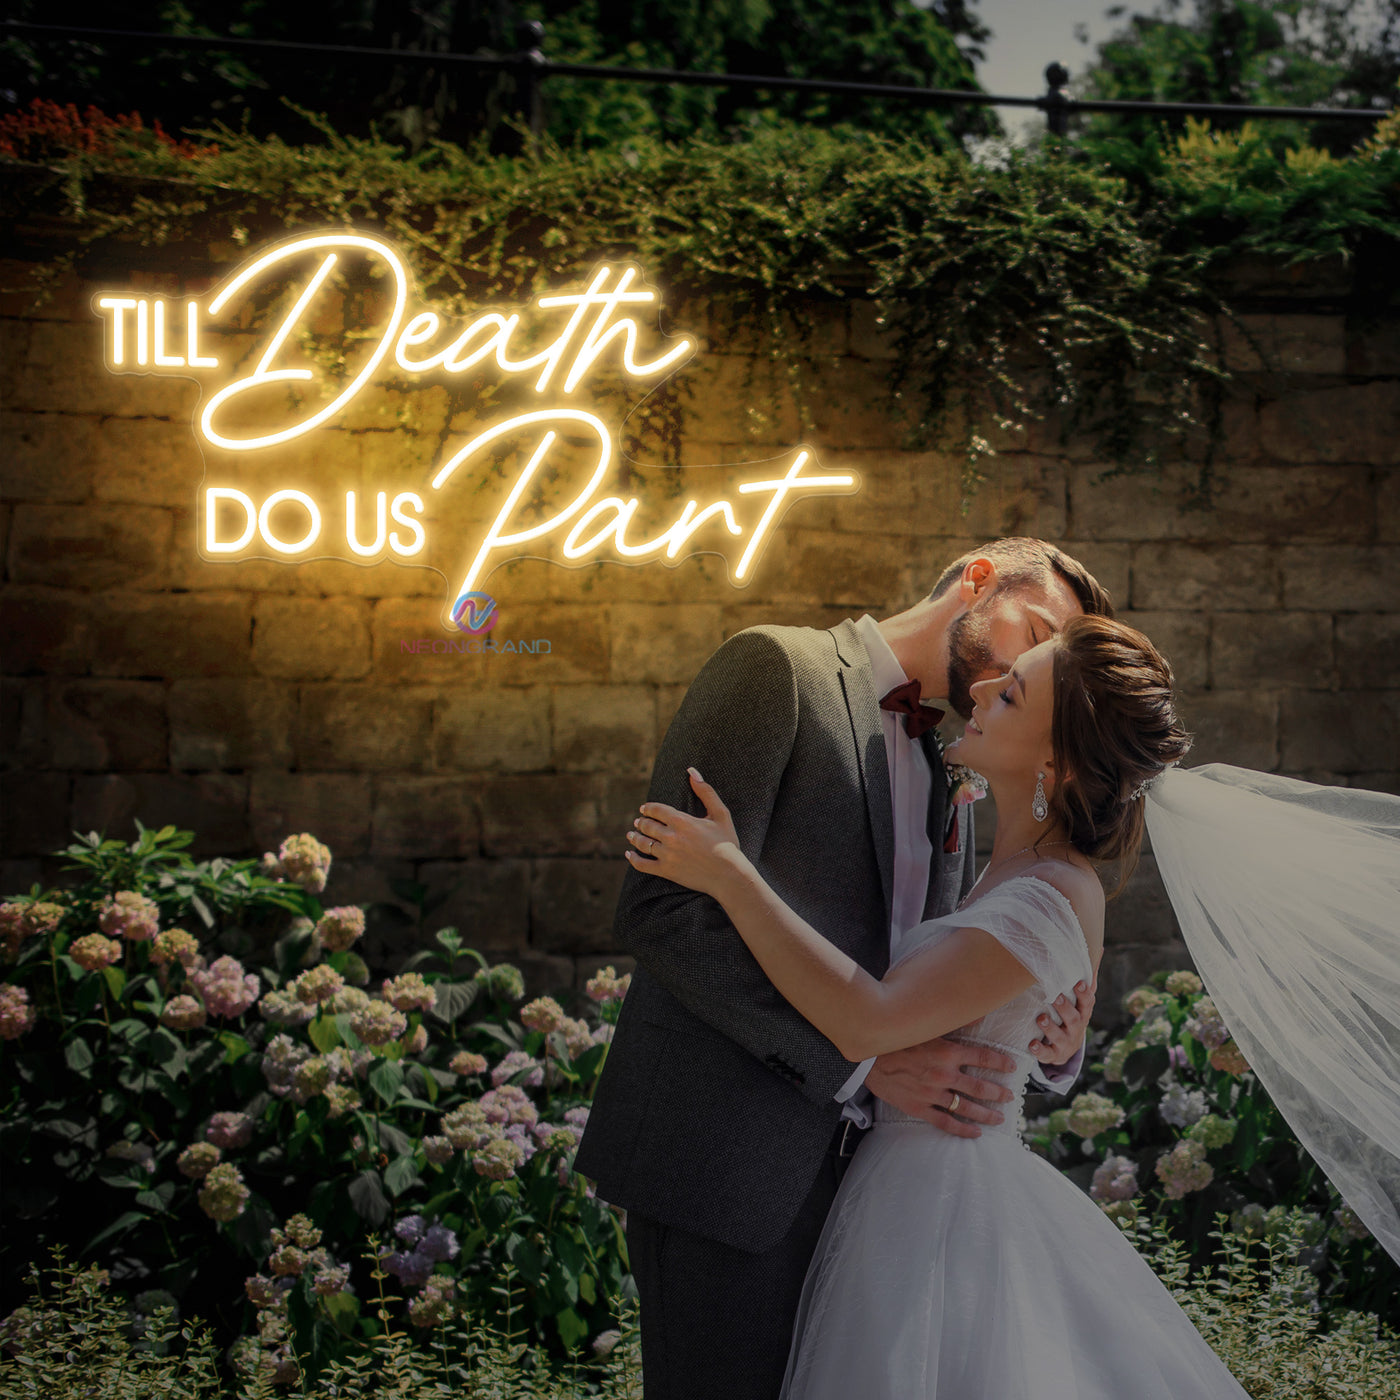 Til Death Do Us Part Neon Sign Wedding Led Light light yellow